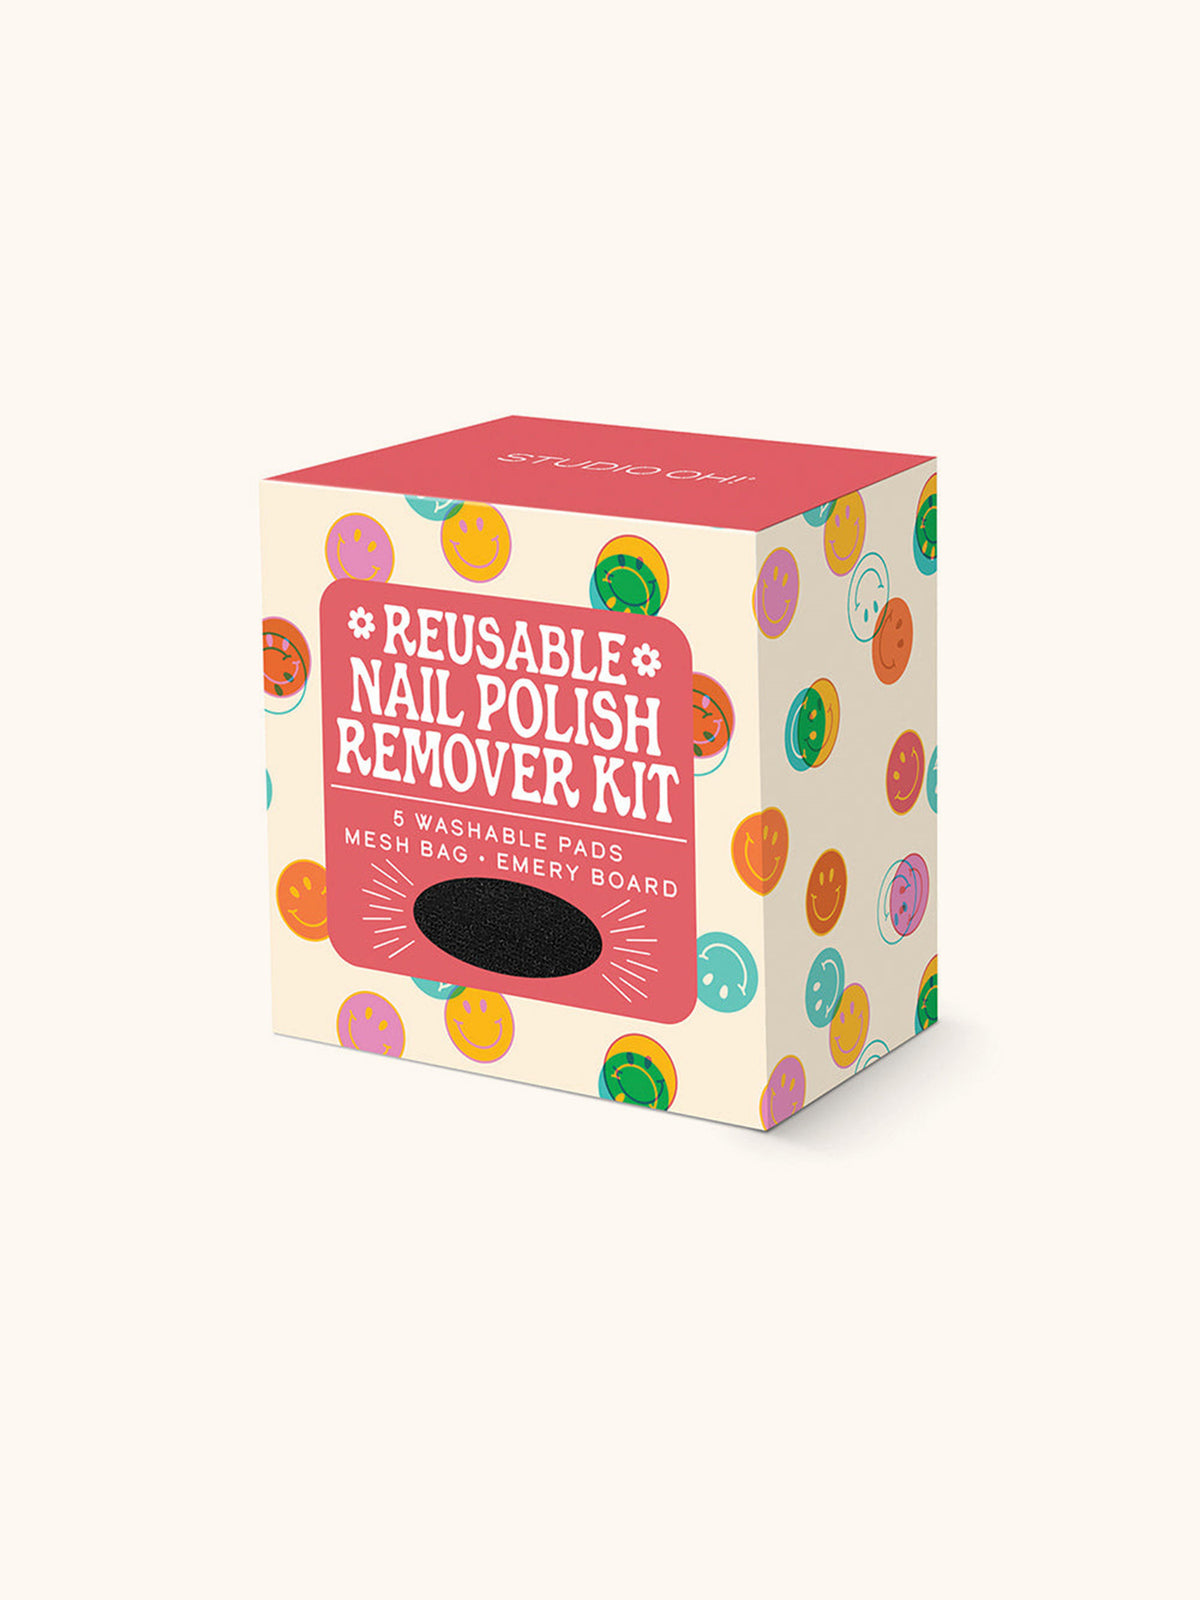 Happy Vibes Reusable Nail Polish Remover Kit – Studio Oh!